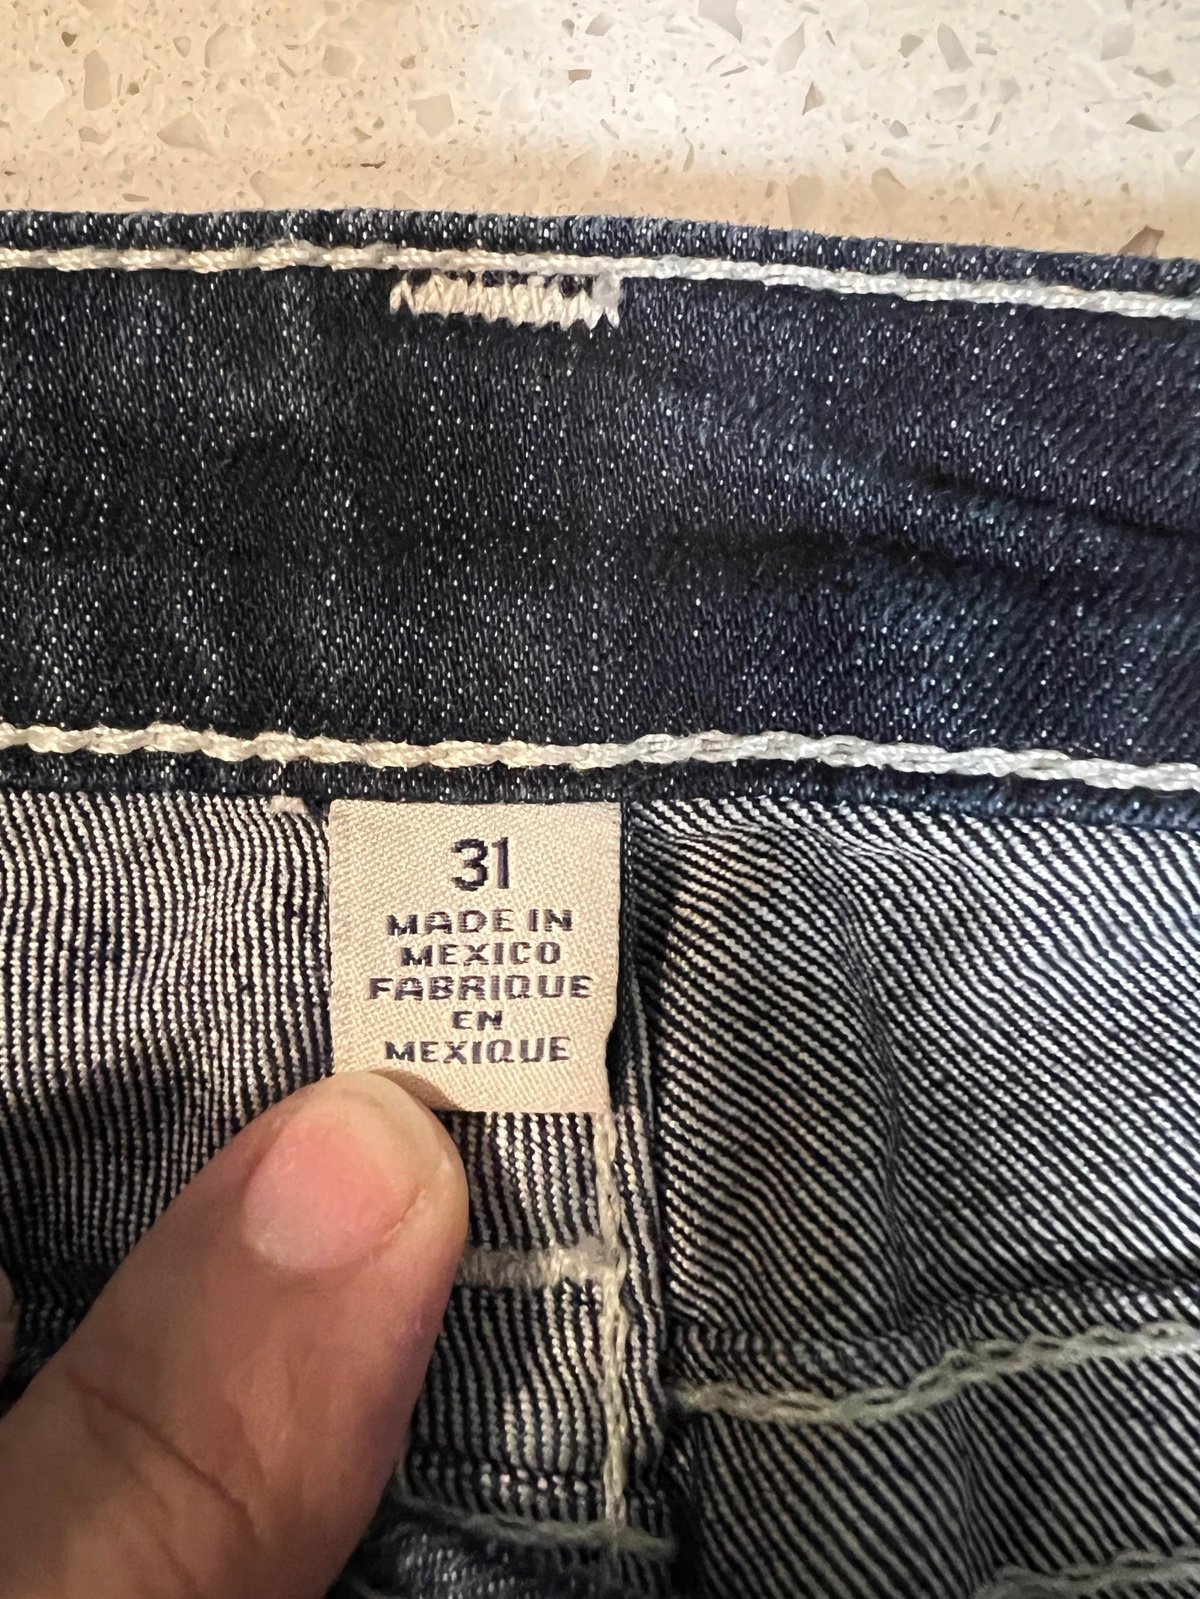 Wholesale price True Religion Women’s Bootcut Blue Jeans Size 31 jRNu5IEgX Everyday Low Prices